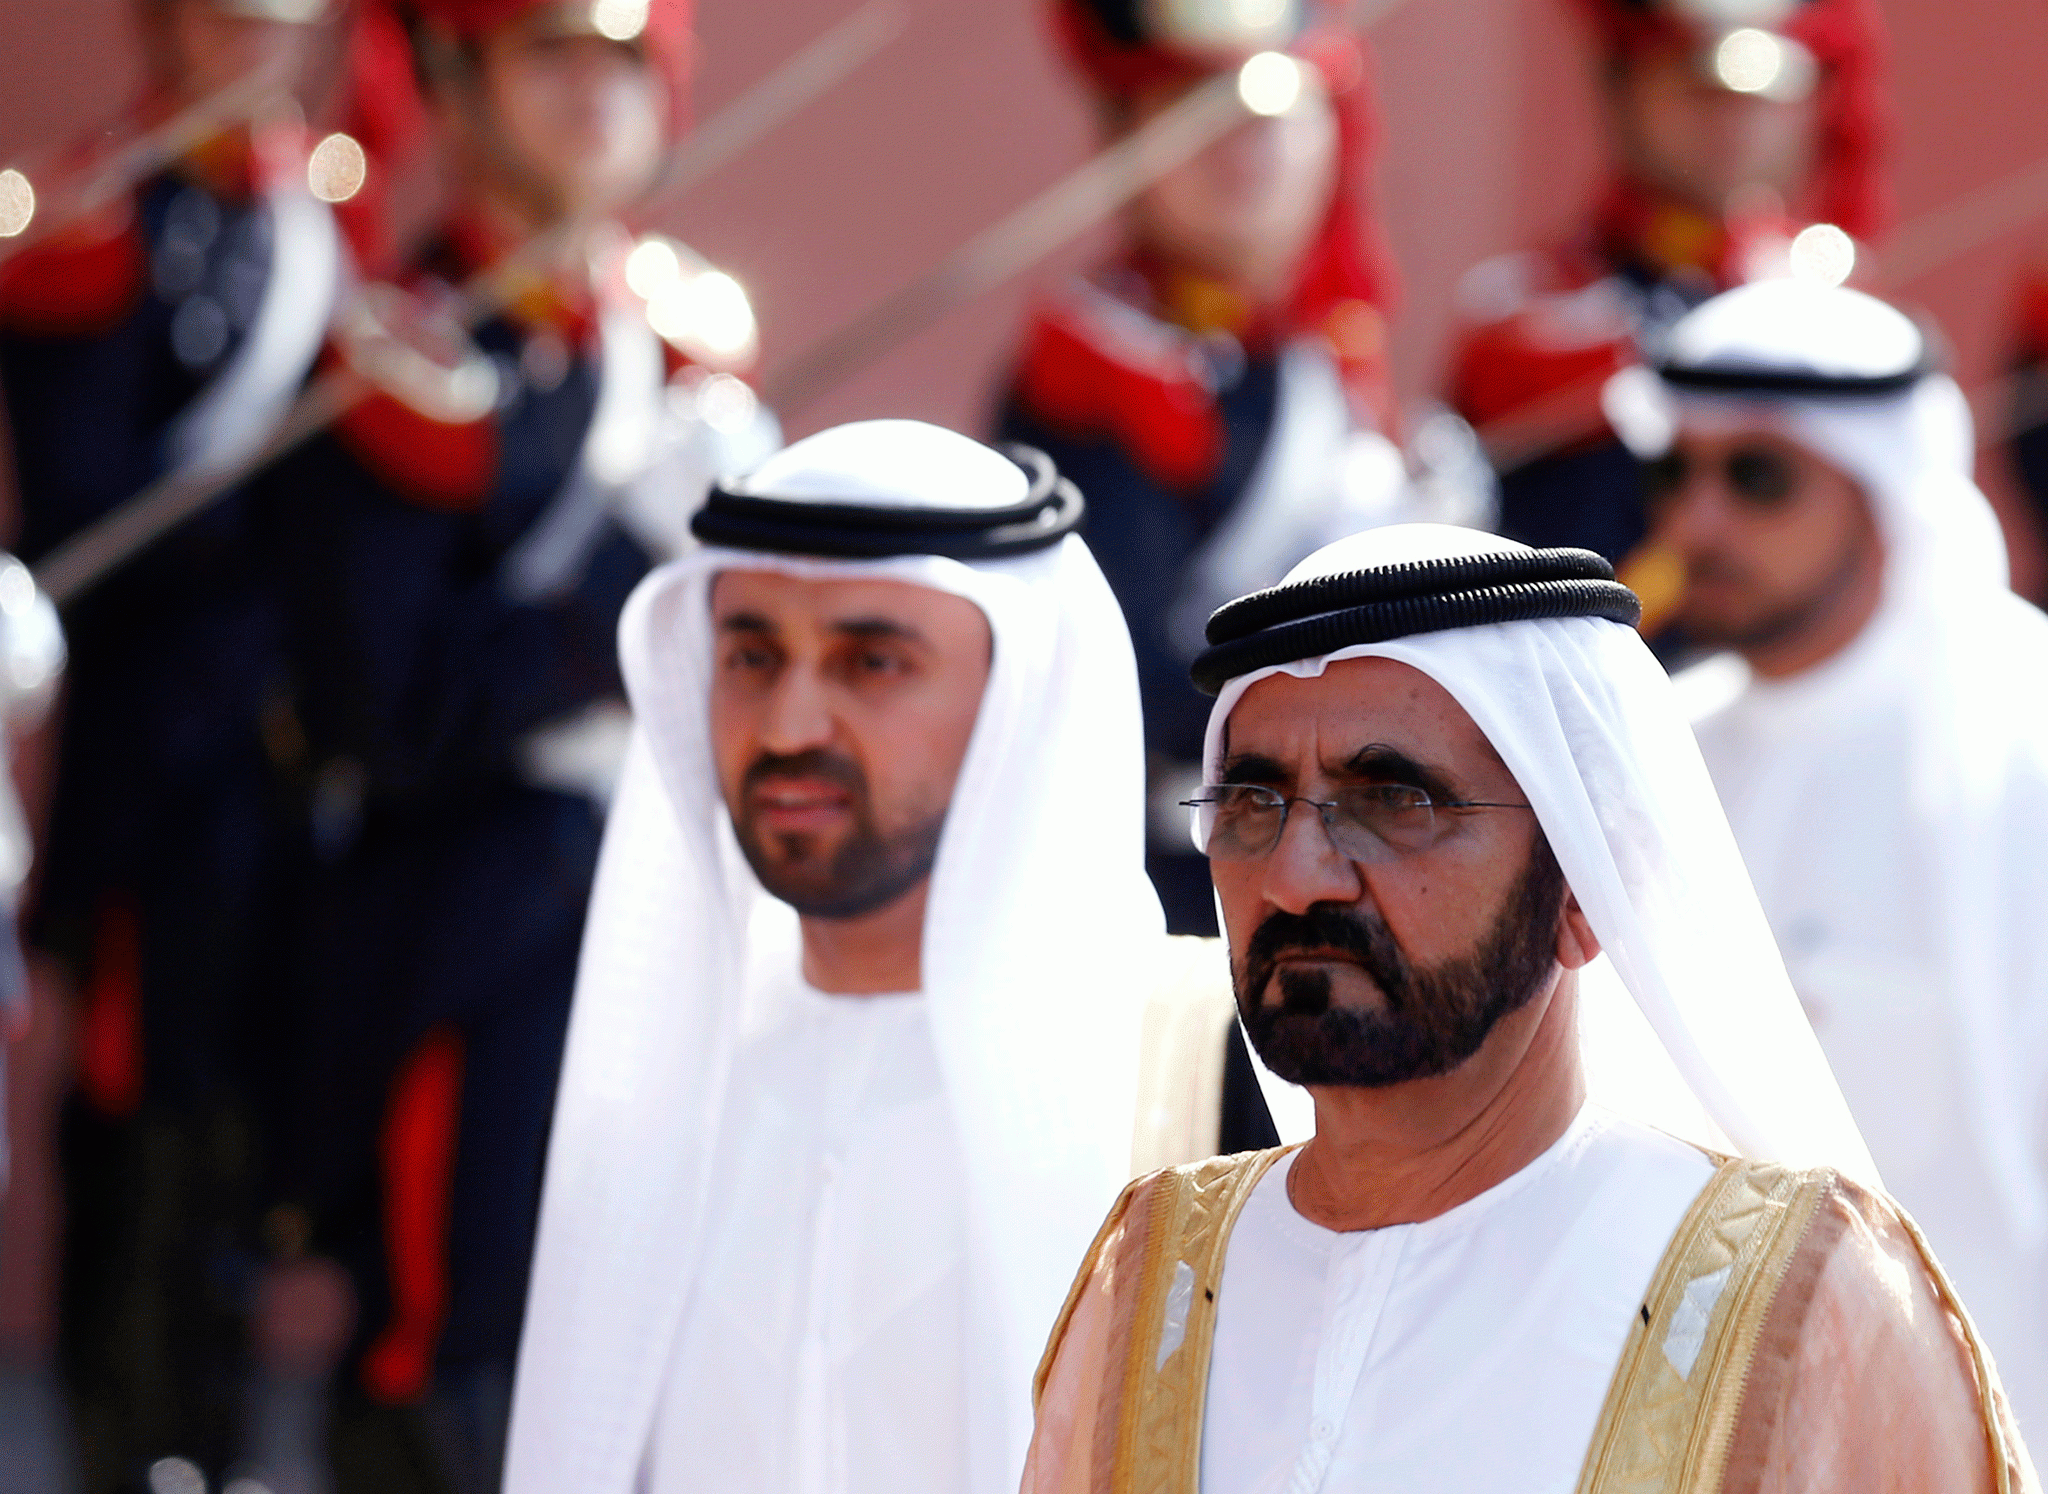 Dubai's king makes spot check at work, fires nine people